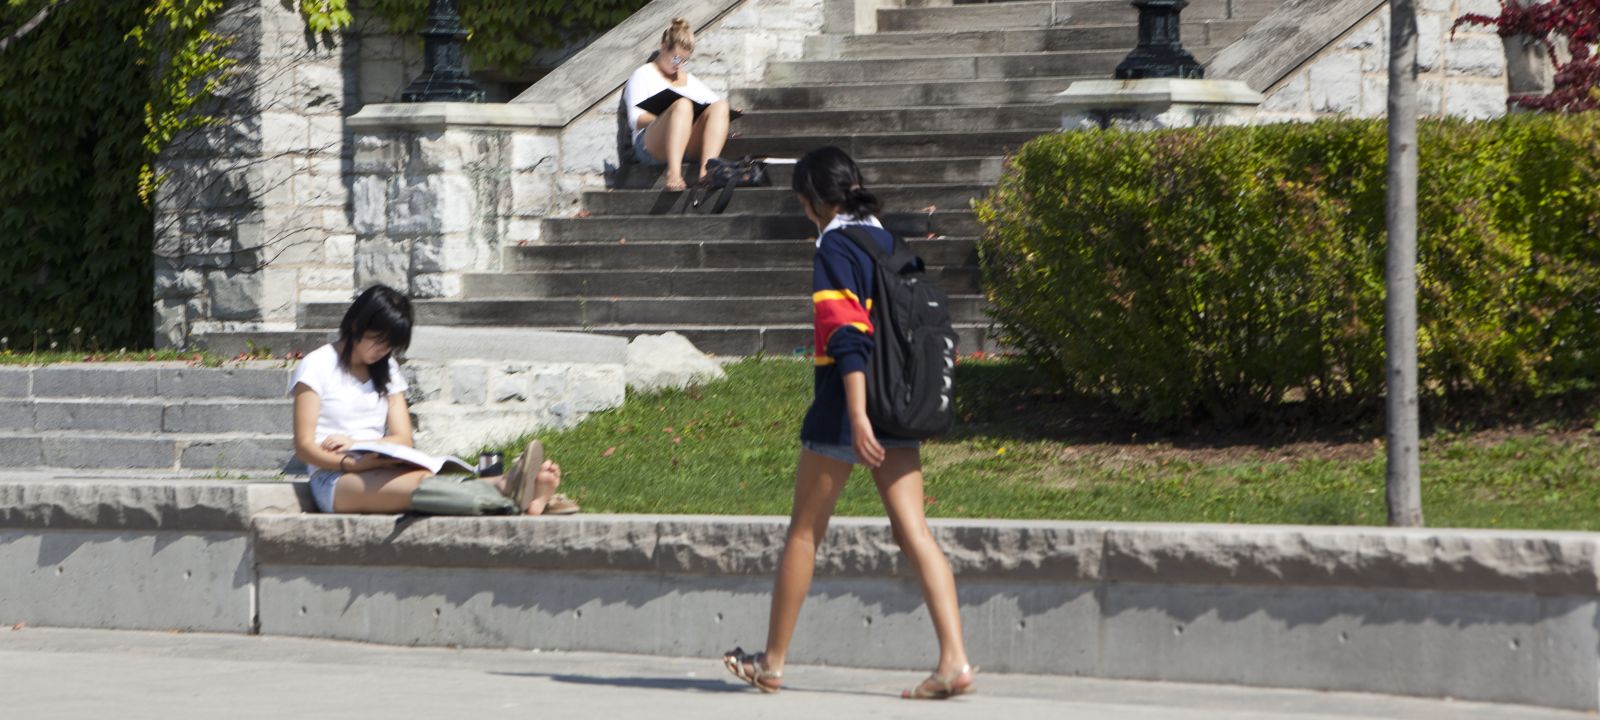 Student wearing shorts walking on campus